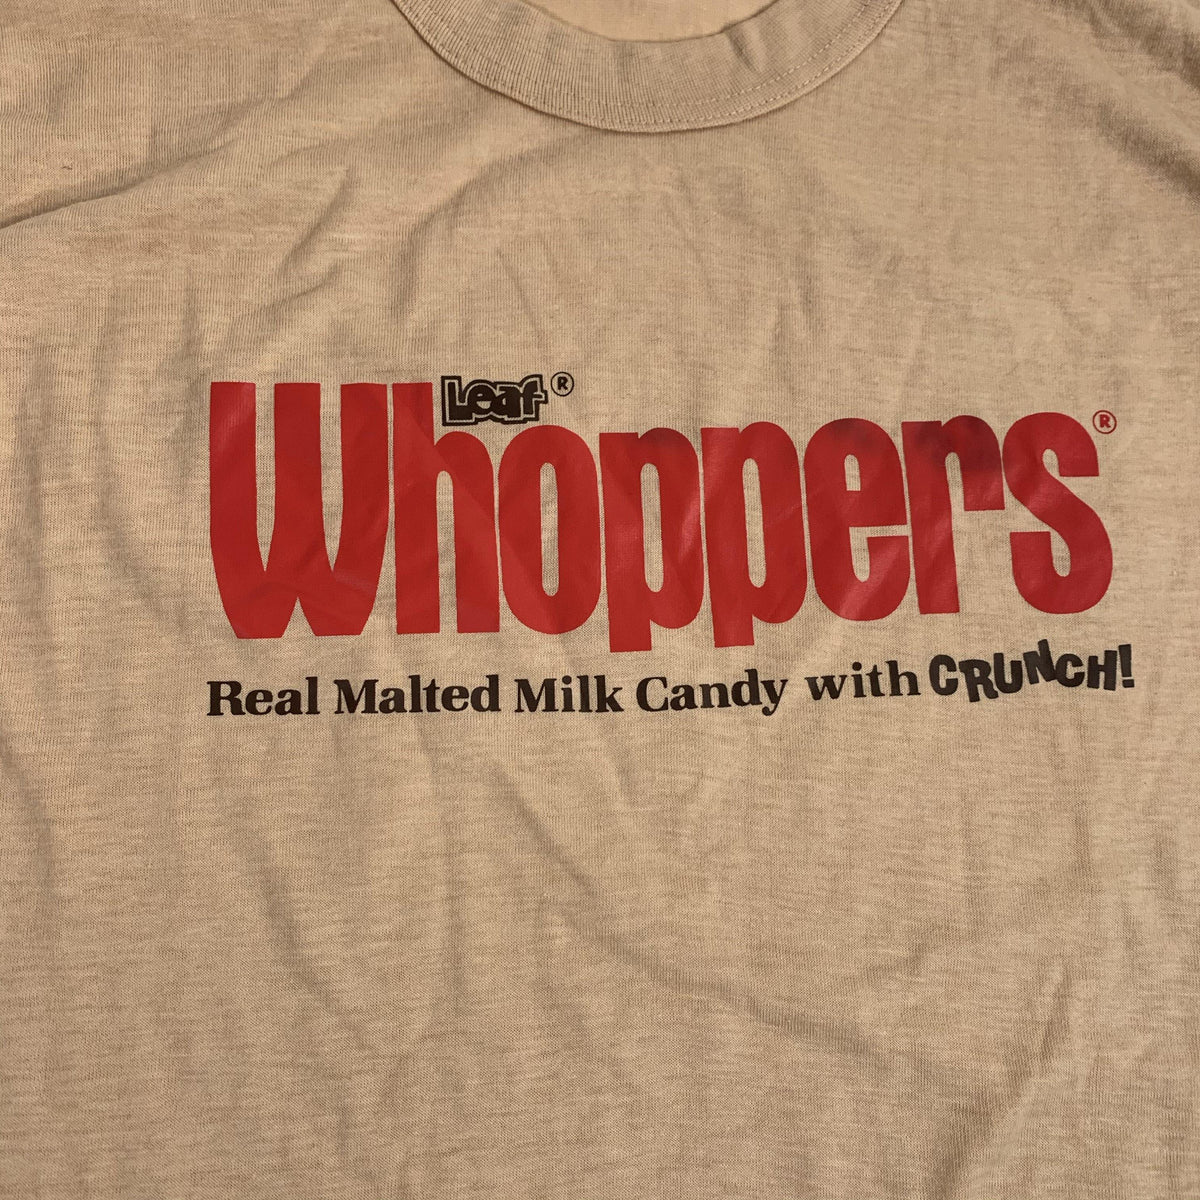 Vintage Leaf Brands “Whoppers” T-Shirt - jointcustodydc